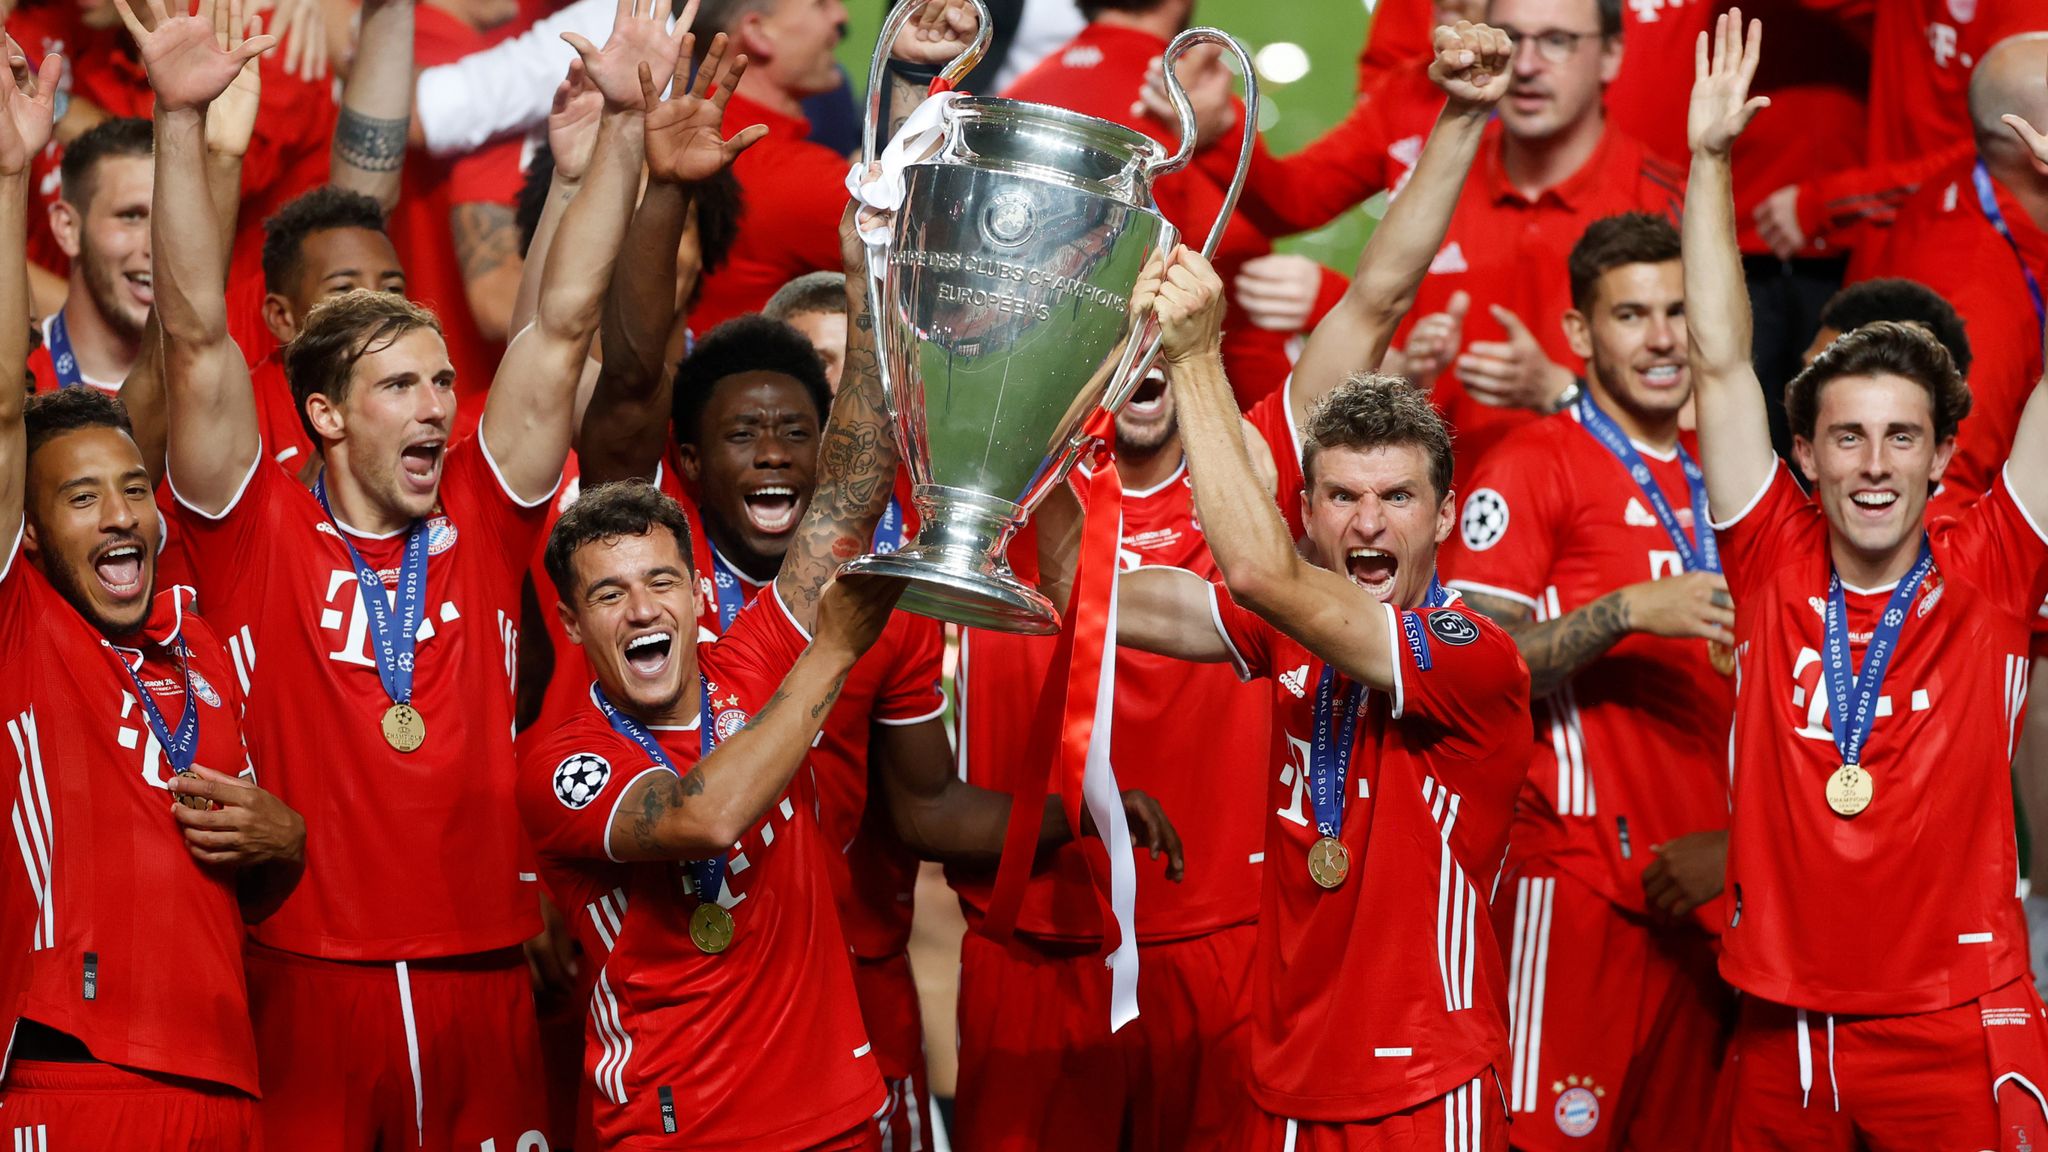 Bloeien Nodig uit Tulpen The Bayern Munich machine overpowers Paris Saint-Germain to secure Champions  League crown | Football News | Sky Sports